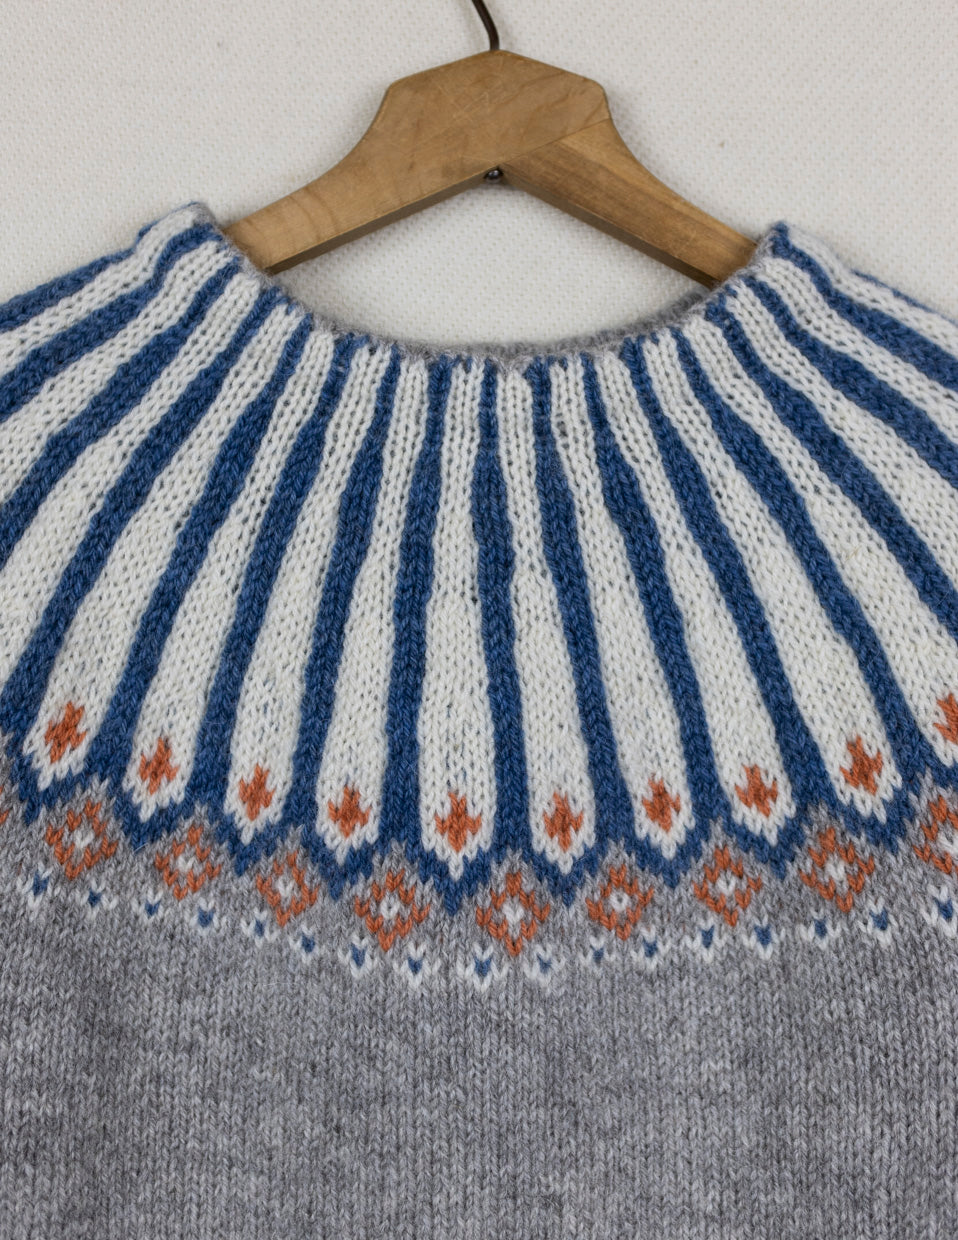 Turid, 3 ply grey sweater knitting kit